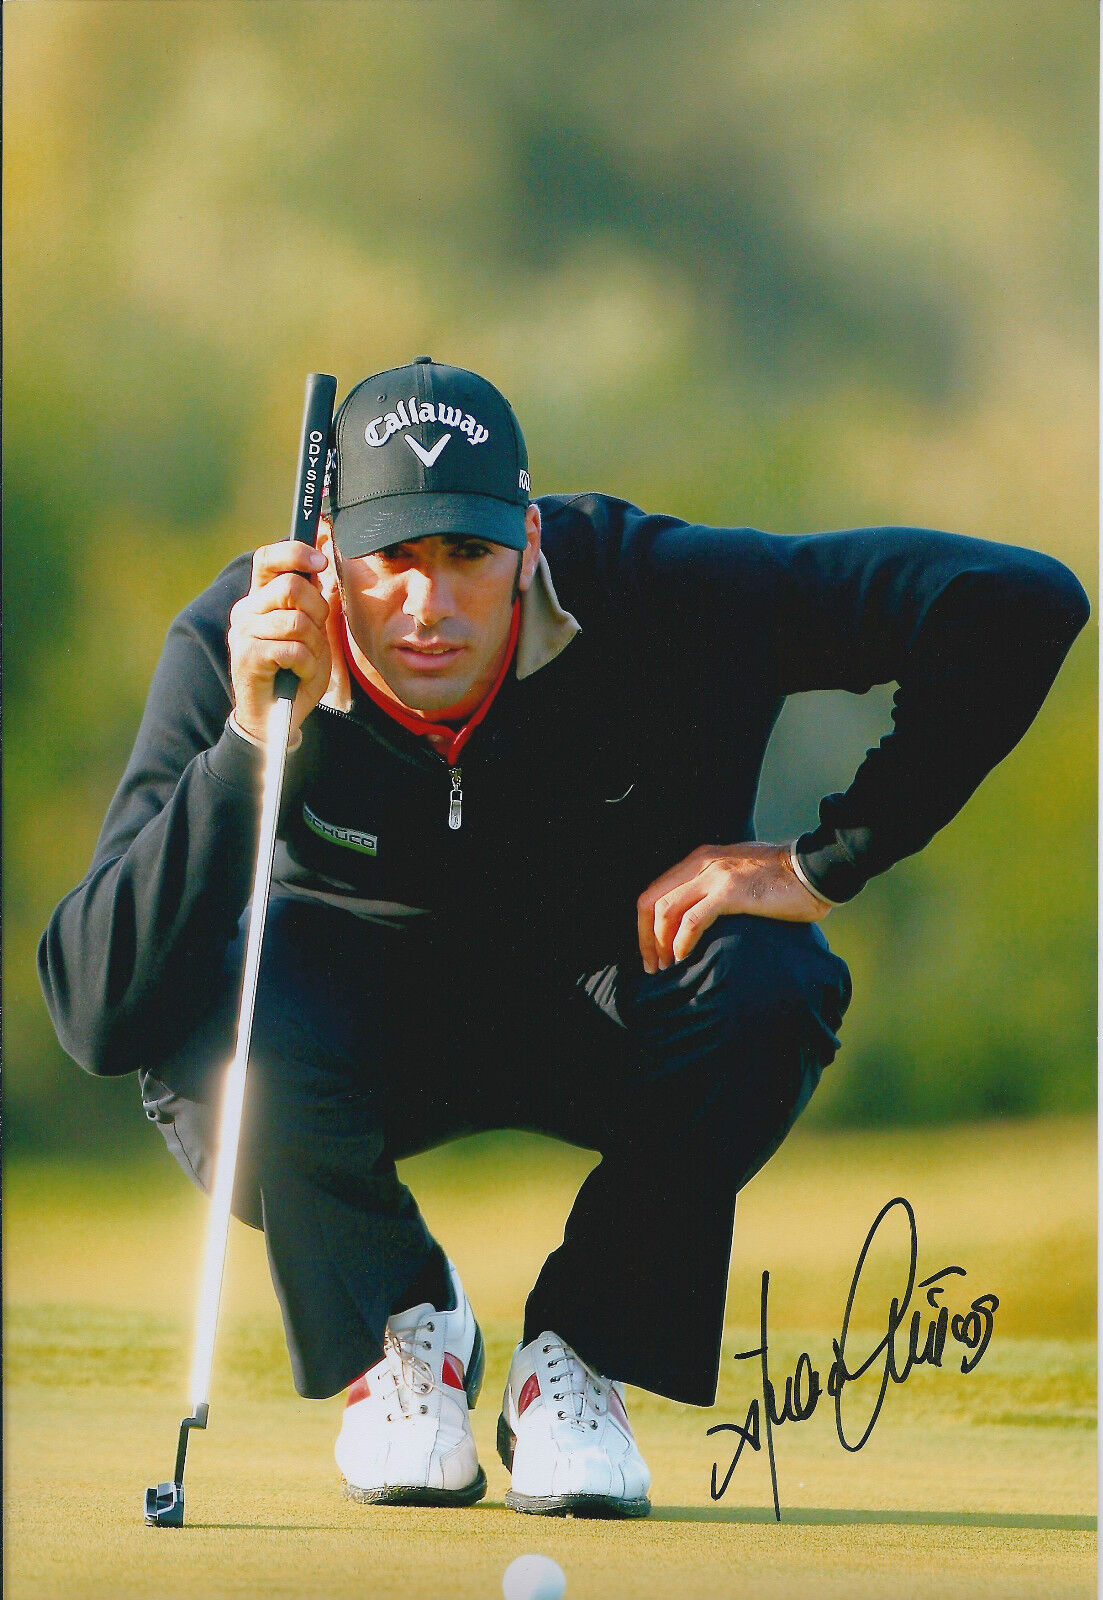 Alvaro QUIROS SIGNED Autograph 12x8 Photo Poster painting AFTAL COA Spanish Golfer